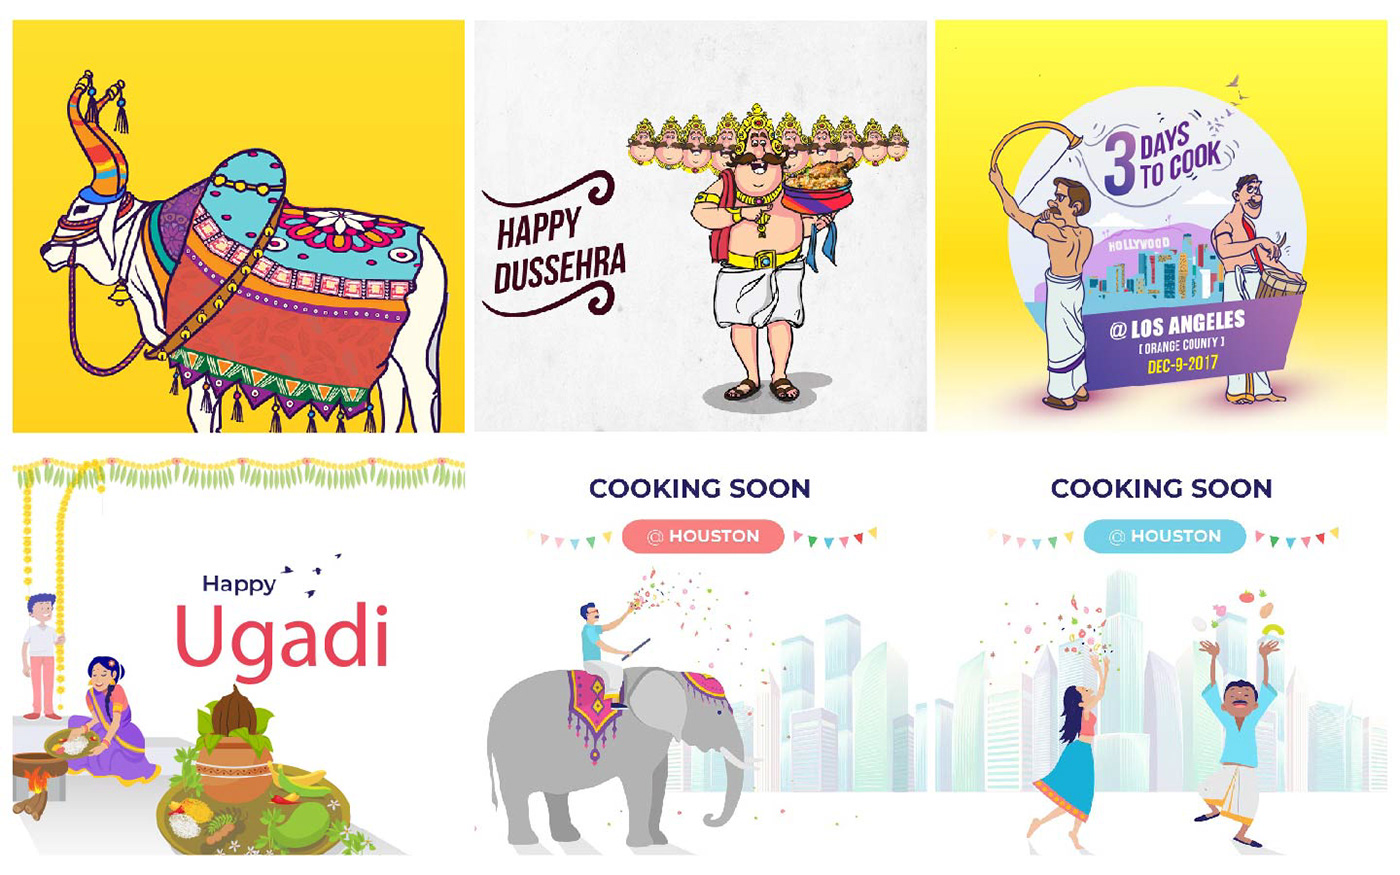 ILLUSTRATION  graphic design  characters creatives restaurant Food  indian culture branding  Digital Art  social media posts